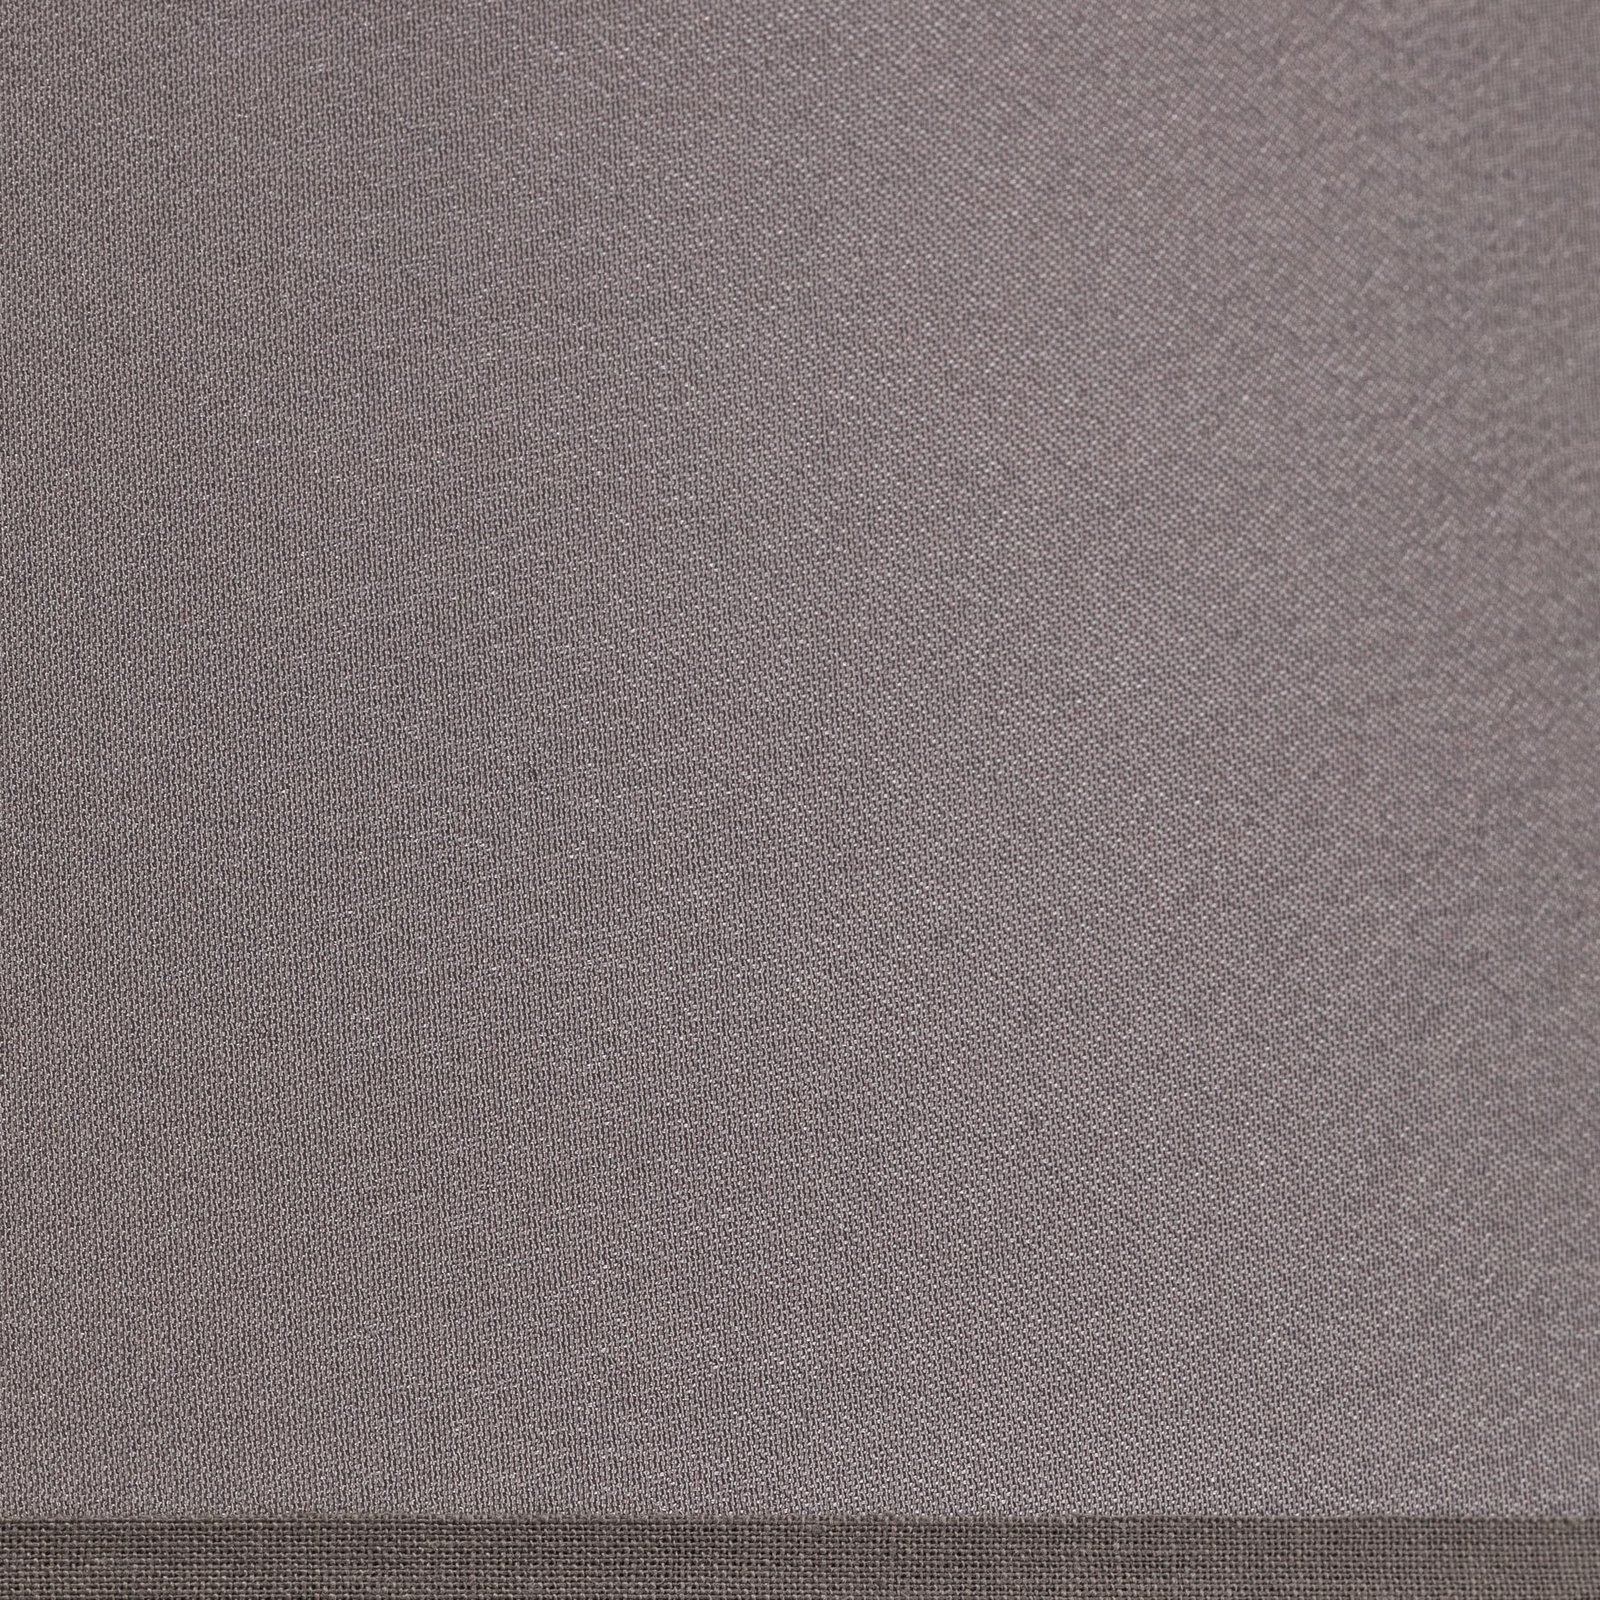 Cone lampeskærm, højde 22,5 cm, grå/hvid chintz